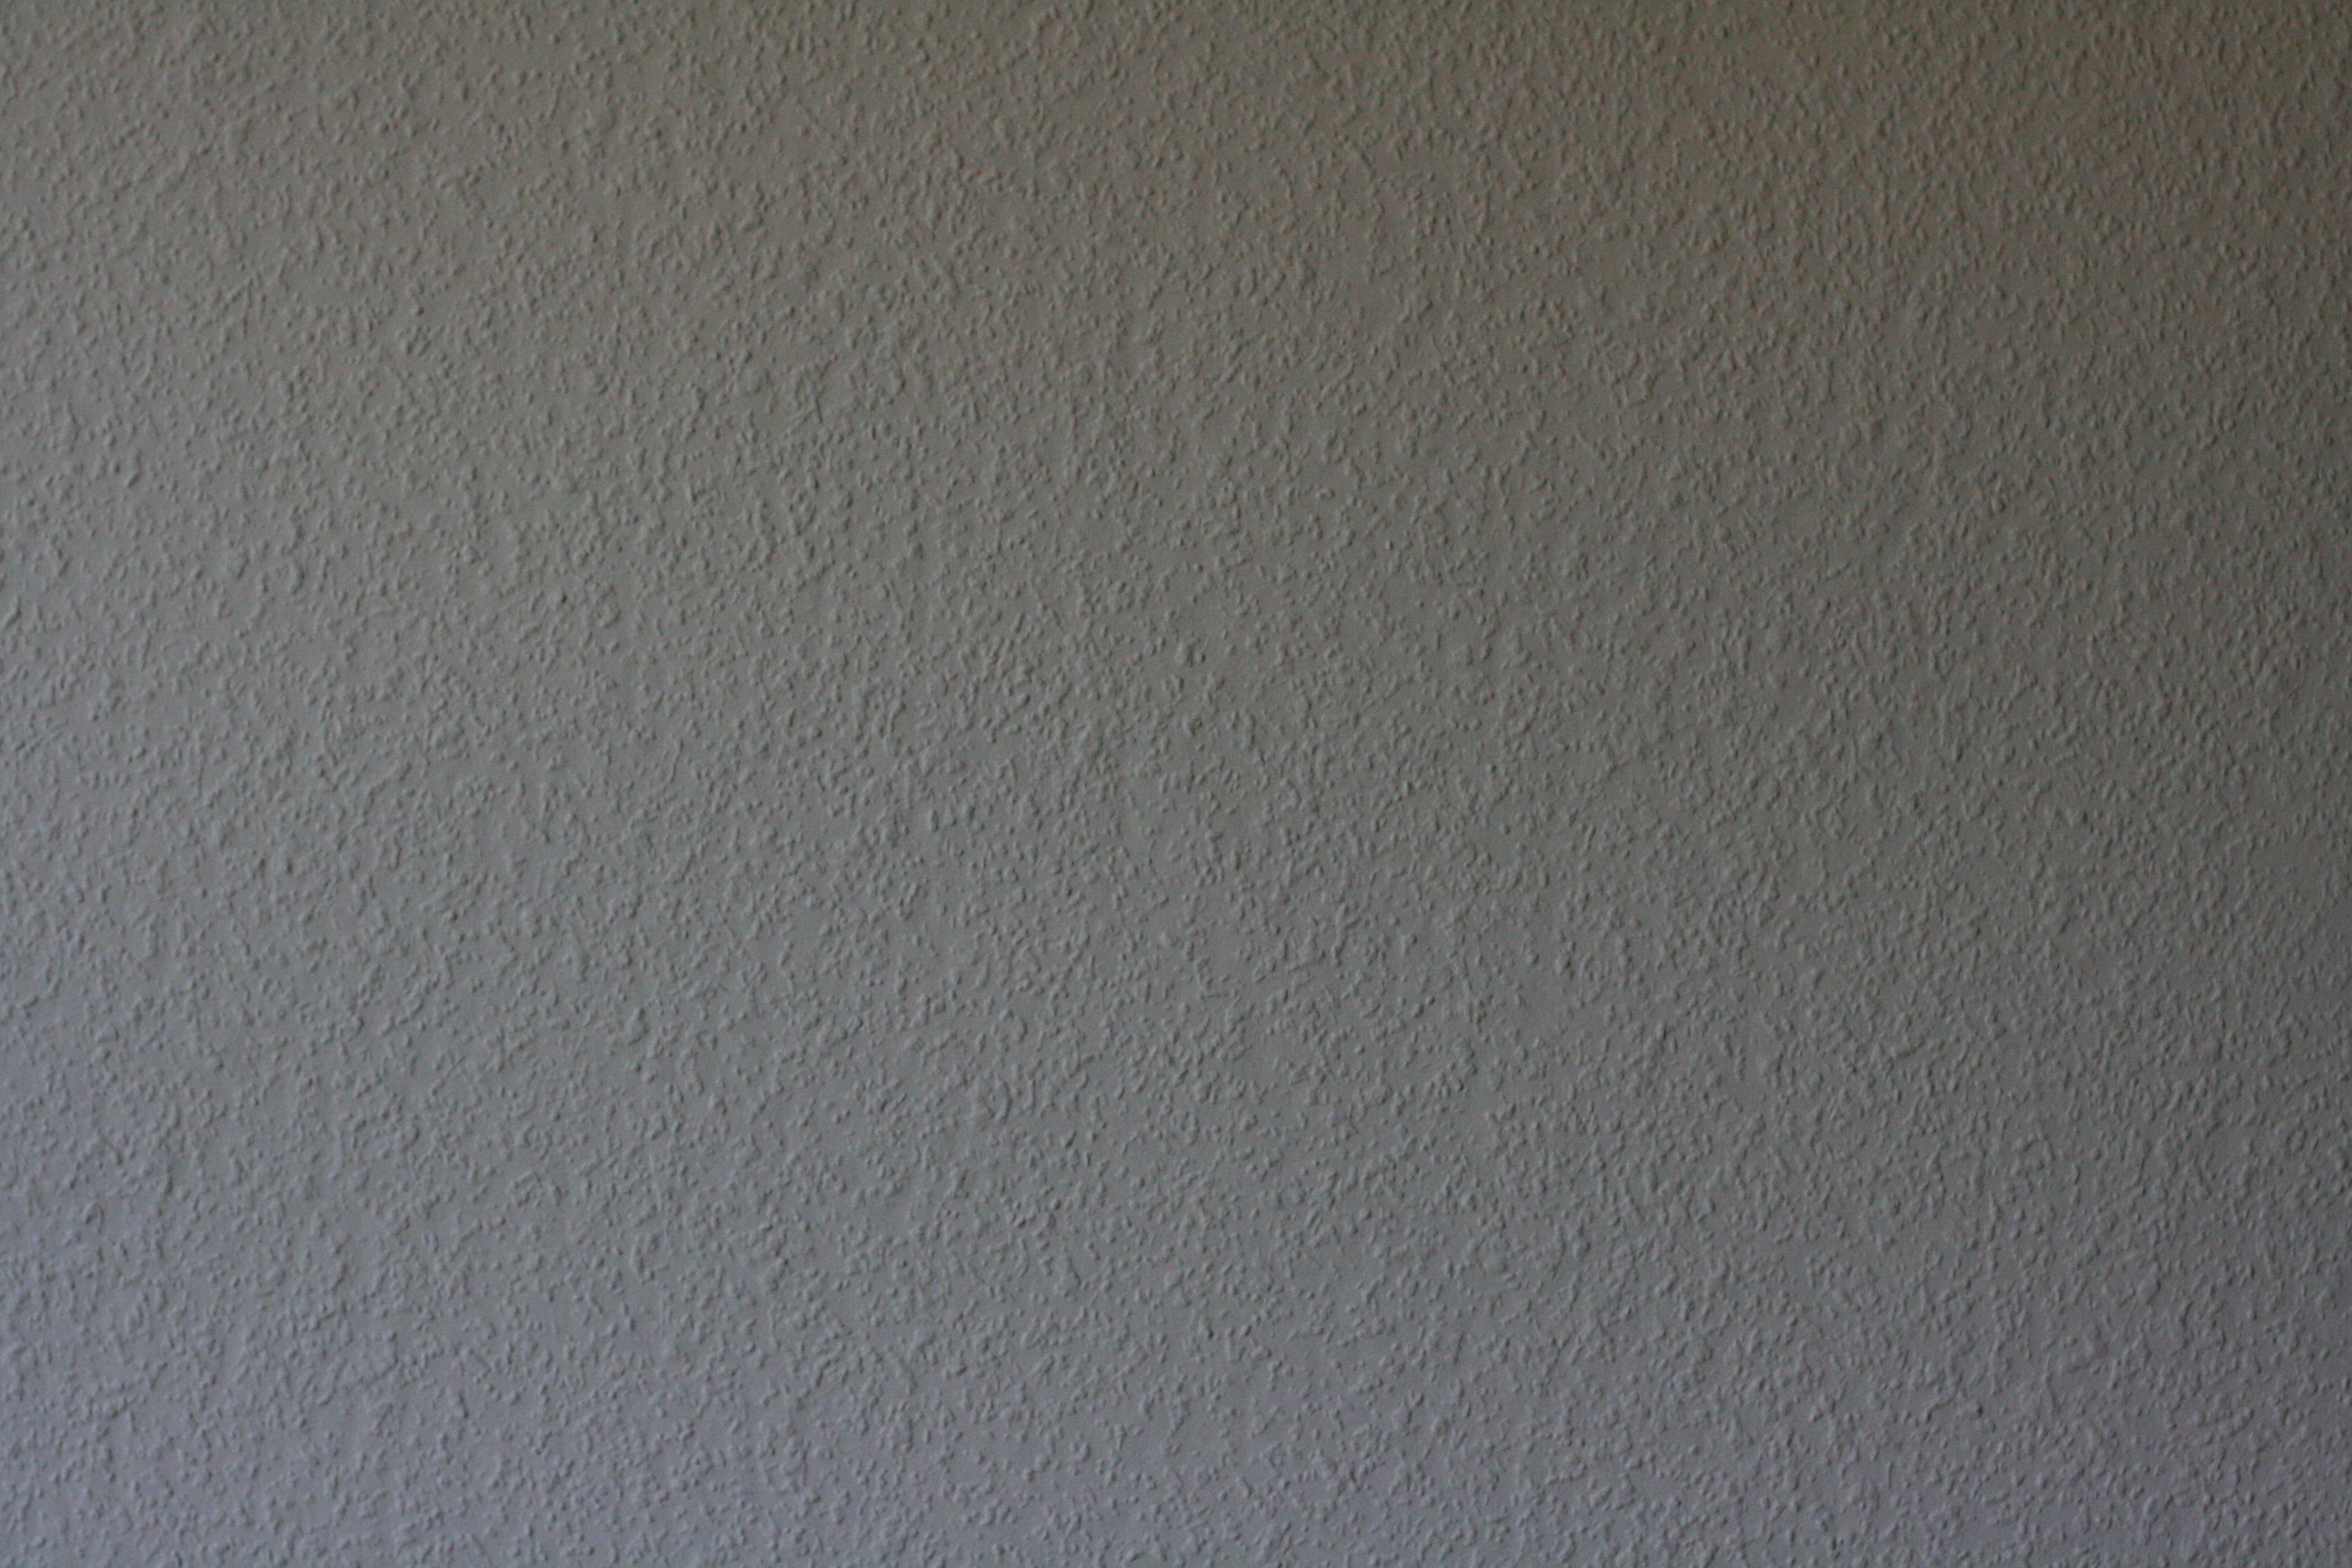 Bedroom Wall Texture